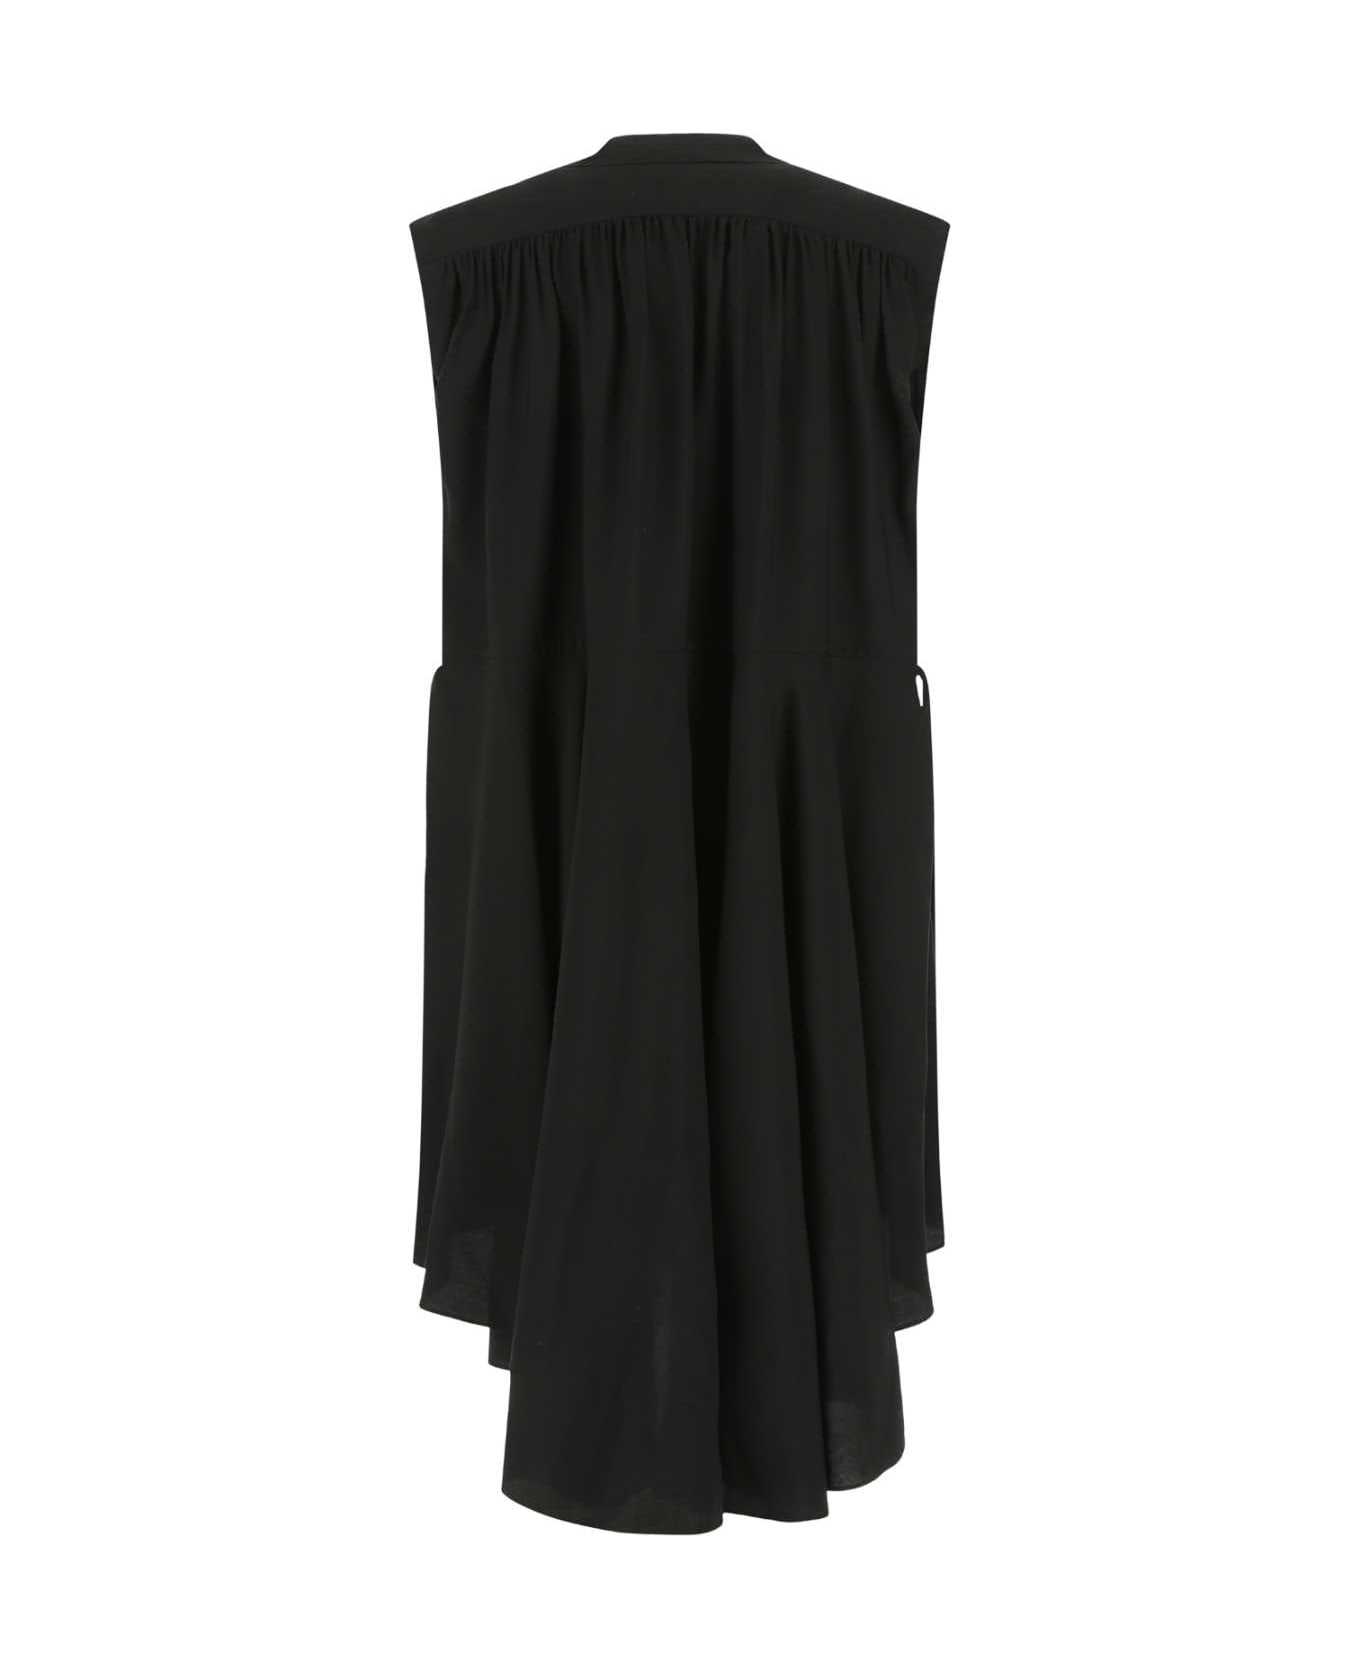 Quira Black Viscose Blend Oversize Dress - Q0009